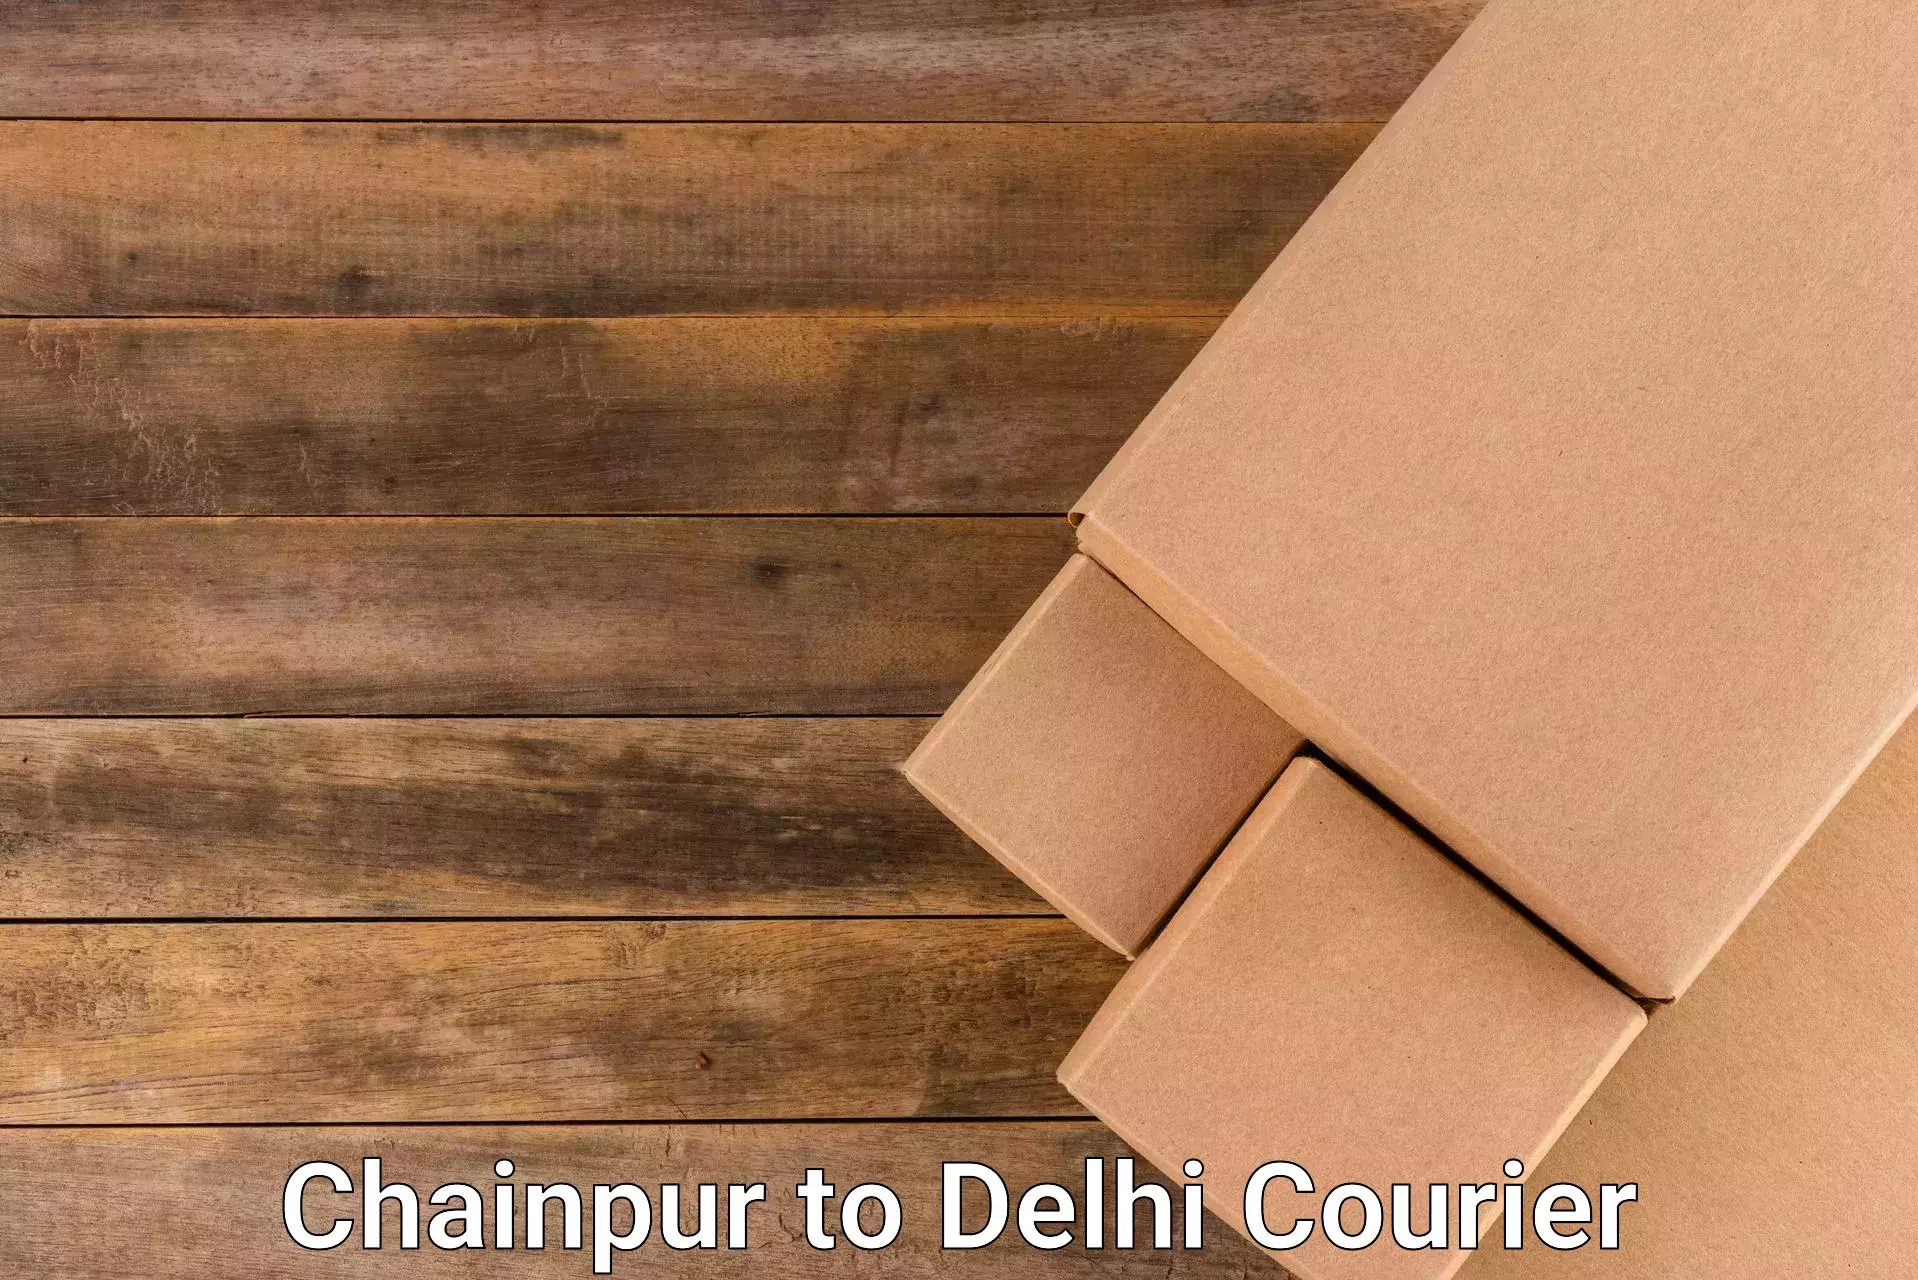 Local delivery service Chainpur to Sarojini Nagar